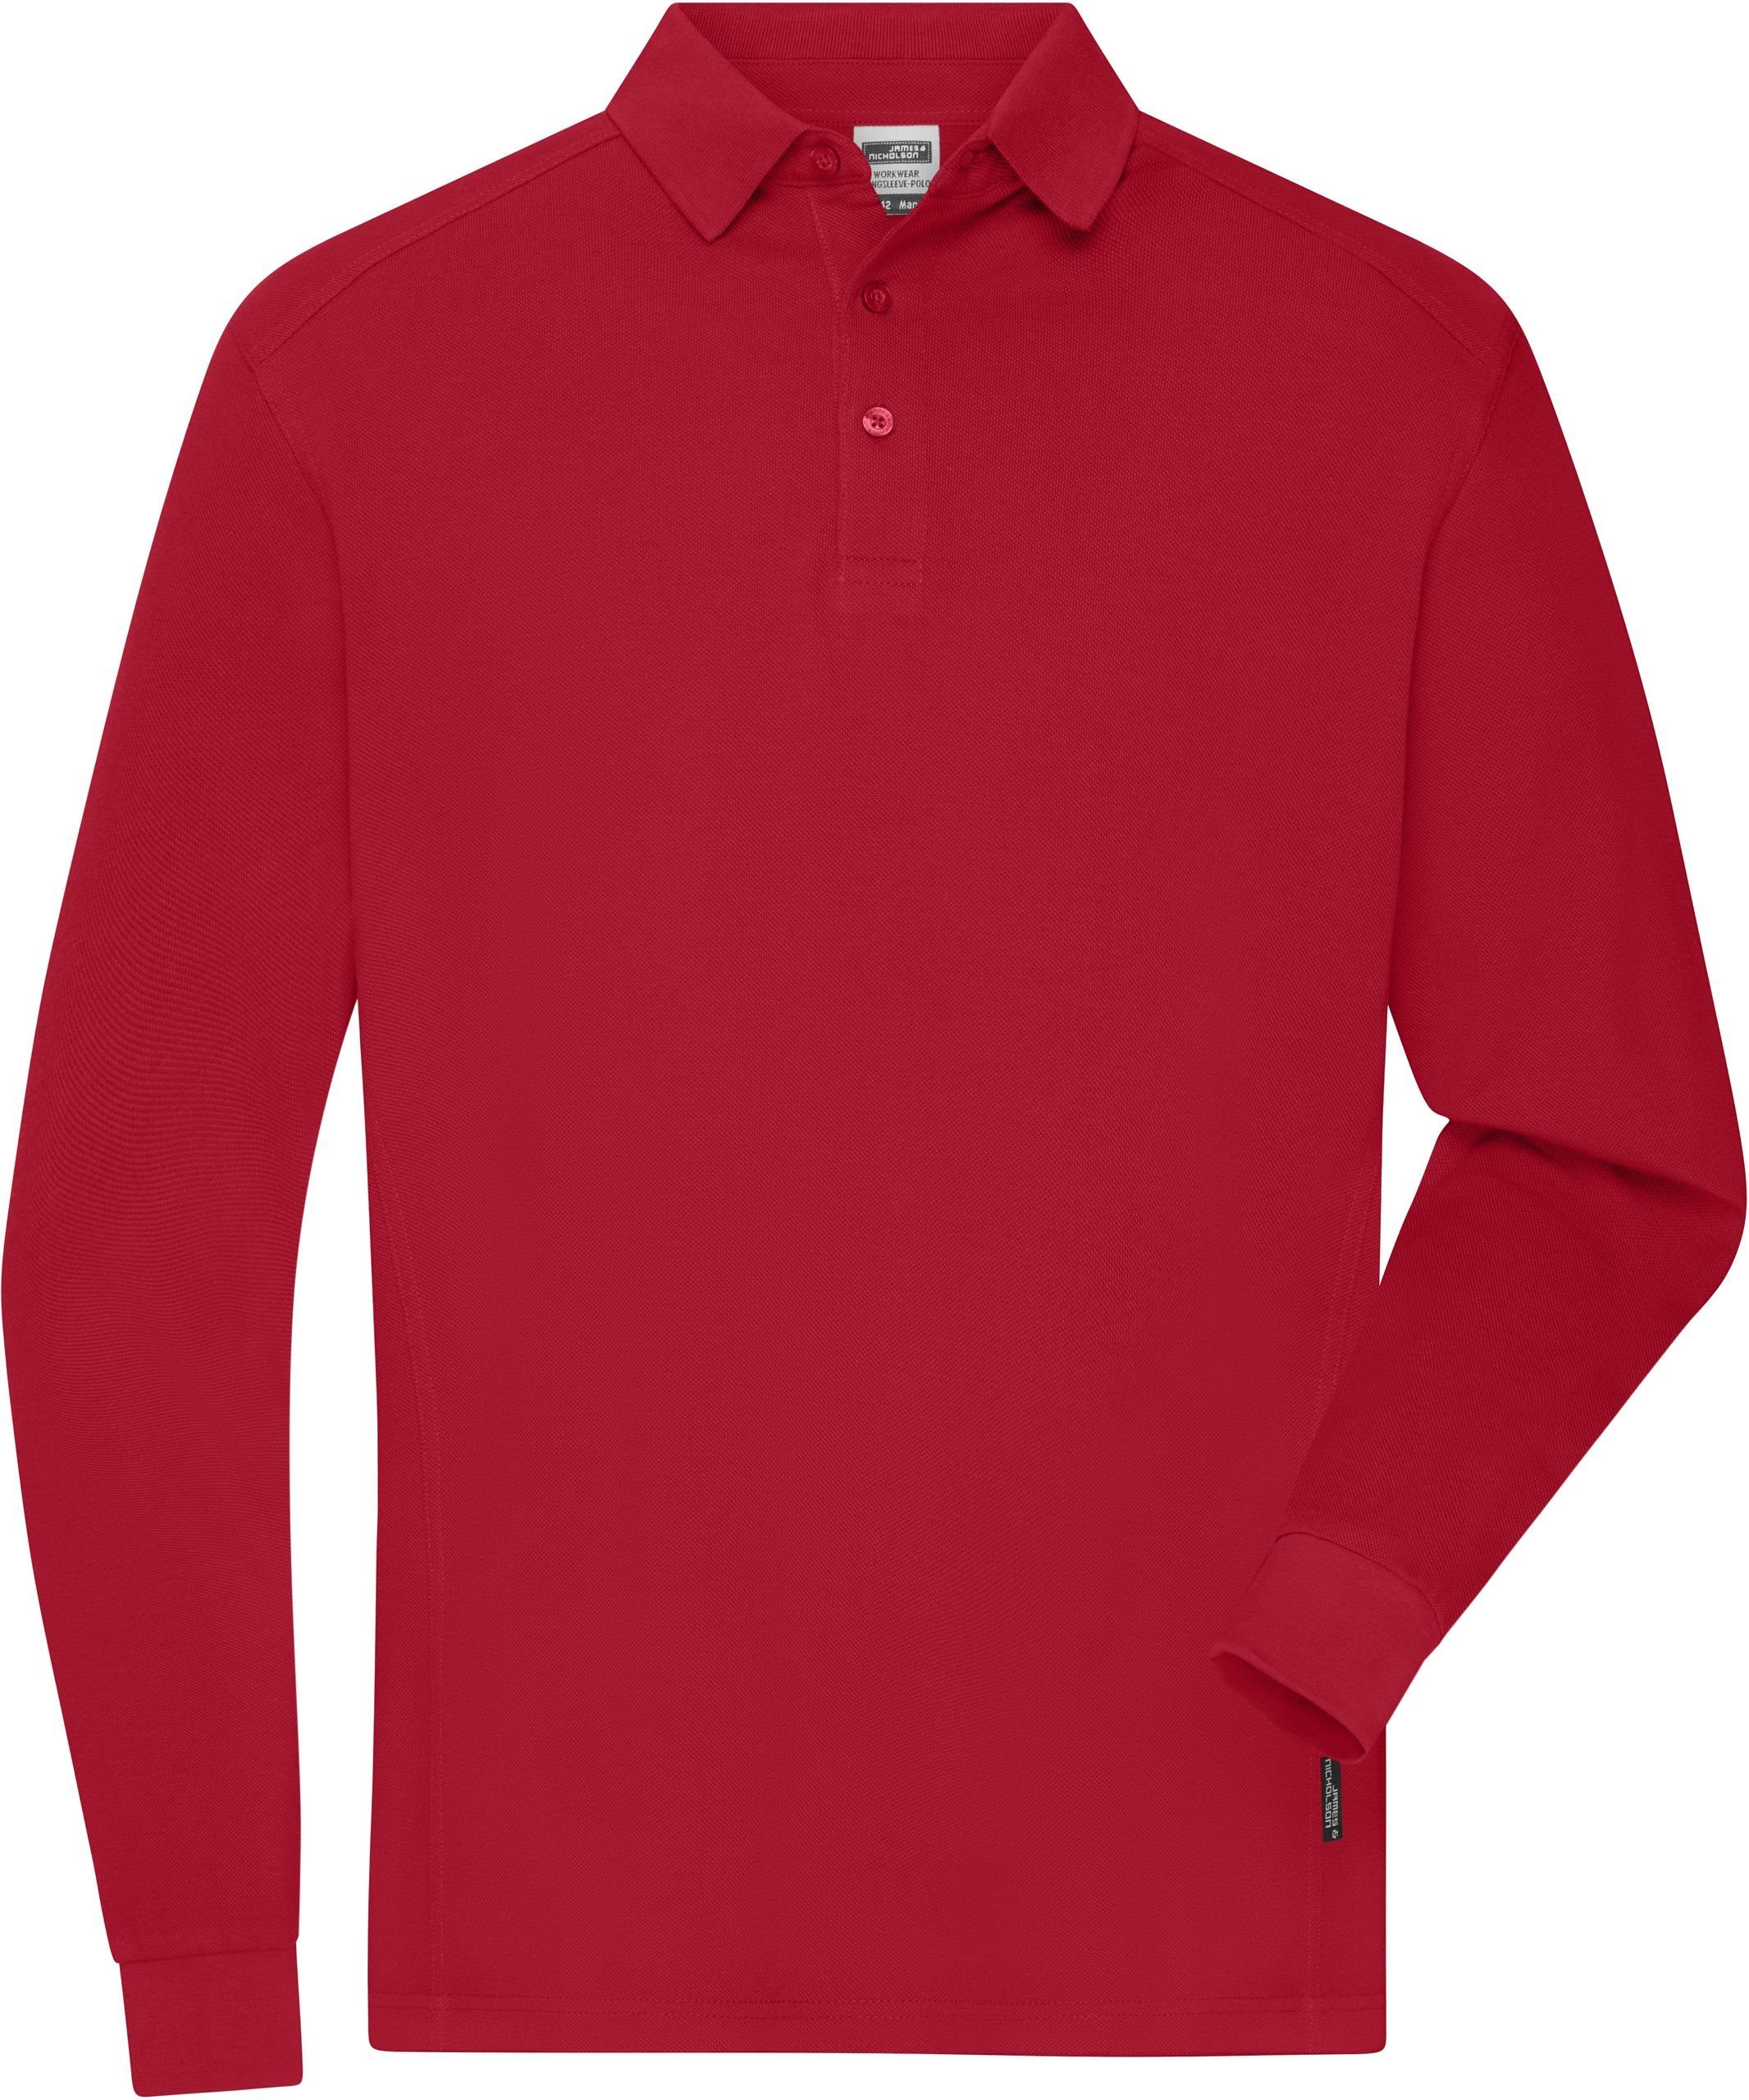 James & Nicholson Poloshirt Herren Workwear Polo langarm RED